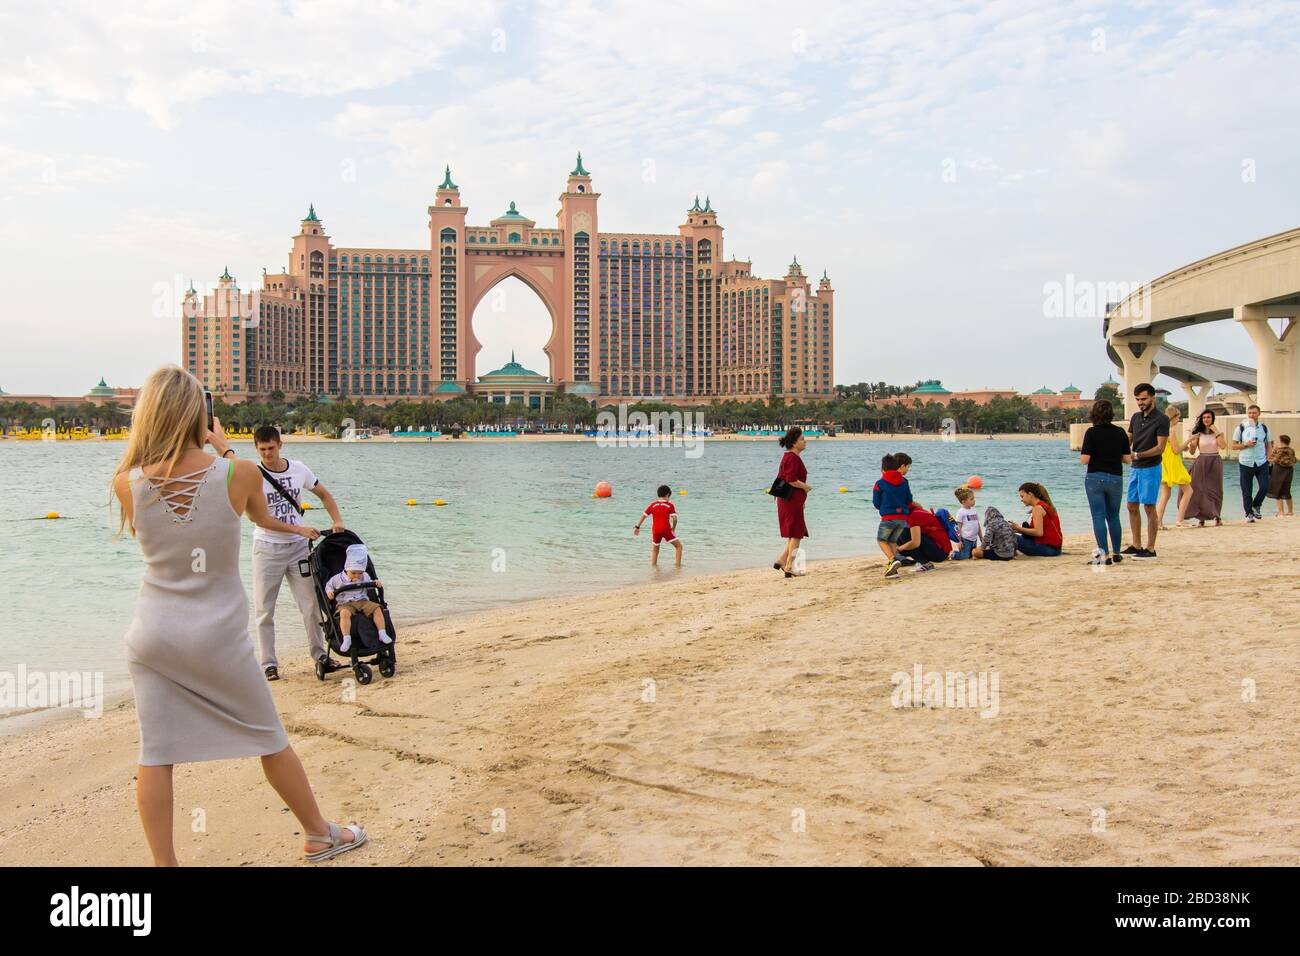 Dubai, VAE - 14. Dezember 2019: Strand mit Touristen im Hintergrund des Hotels Atlantis. Stockfoto